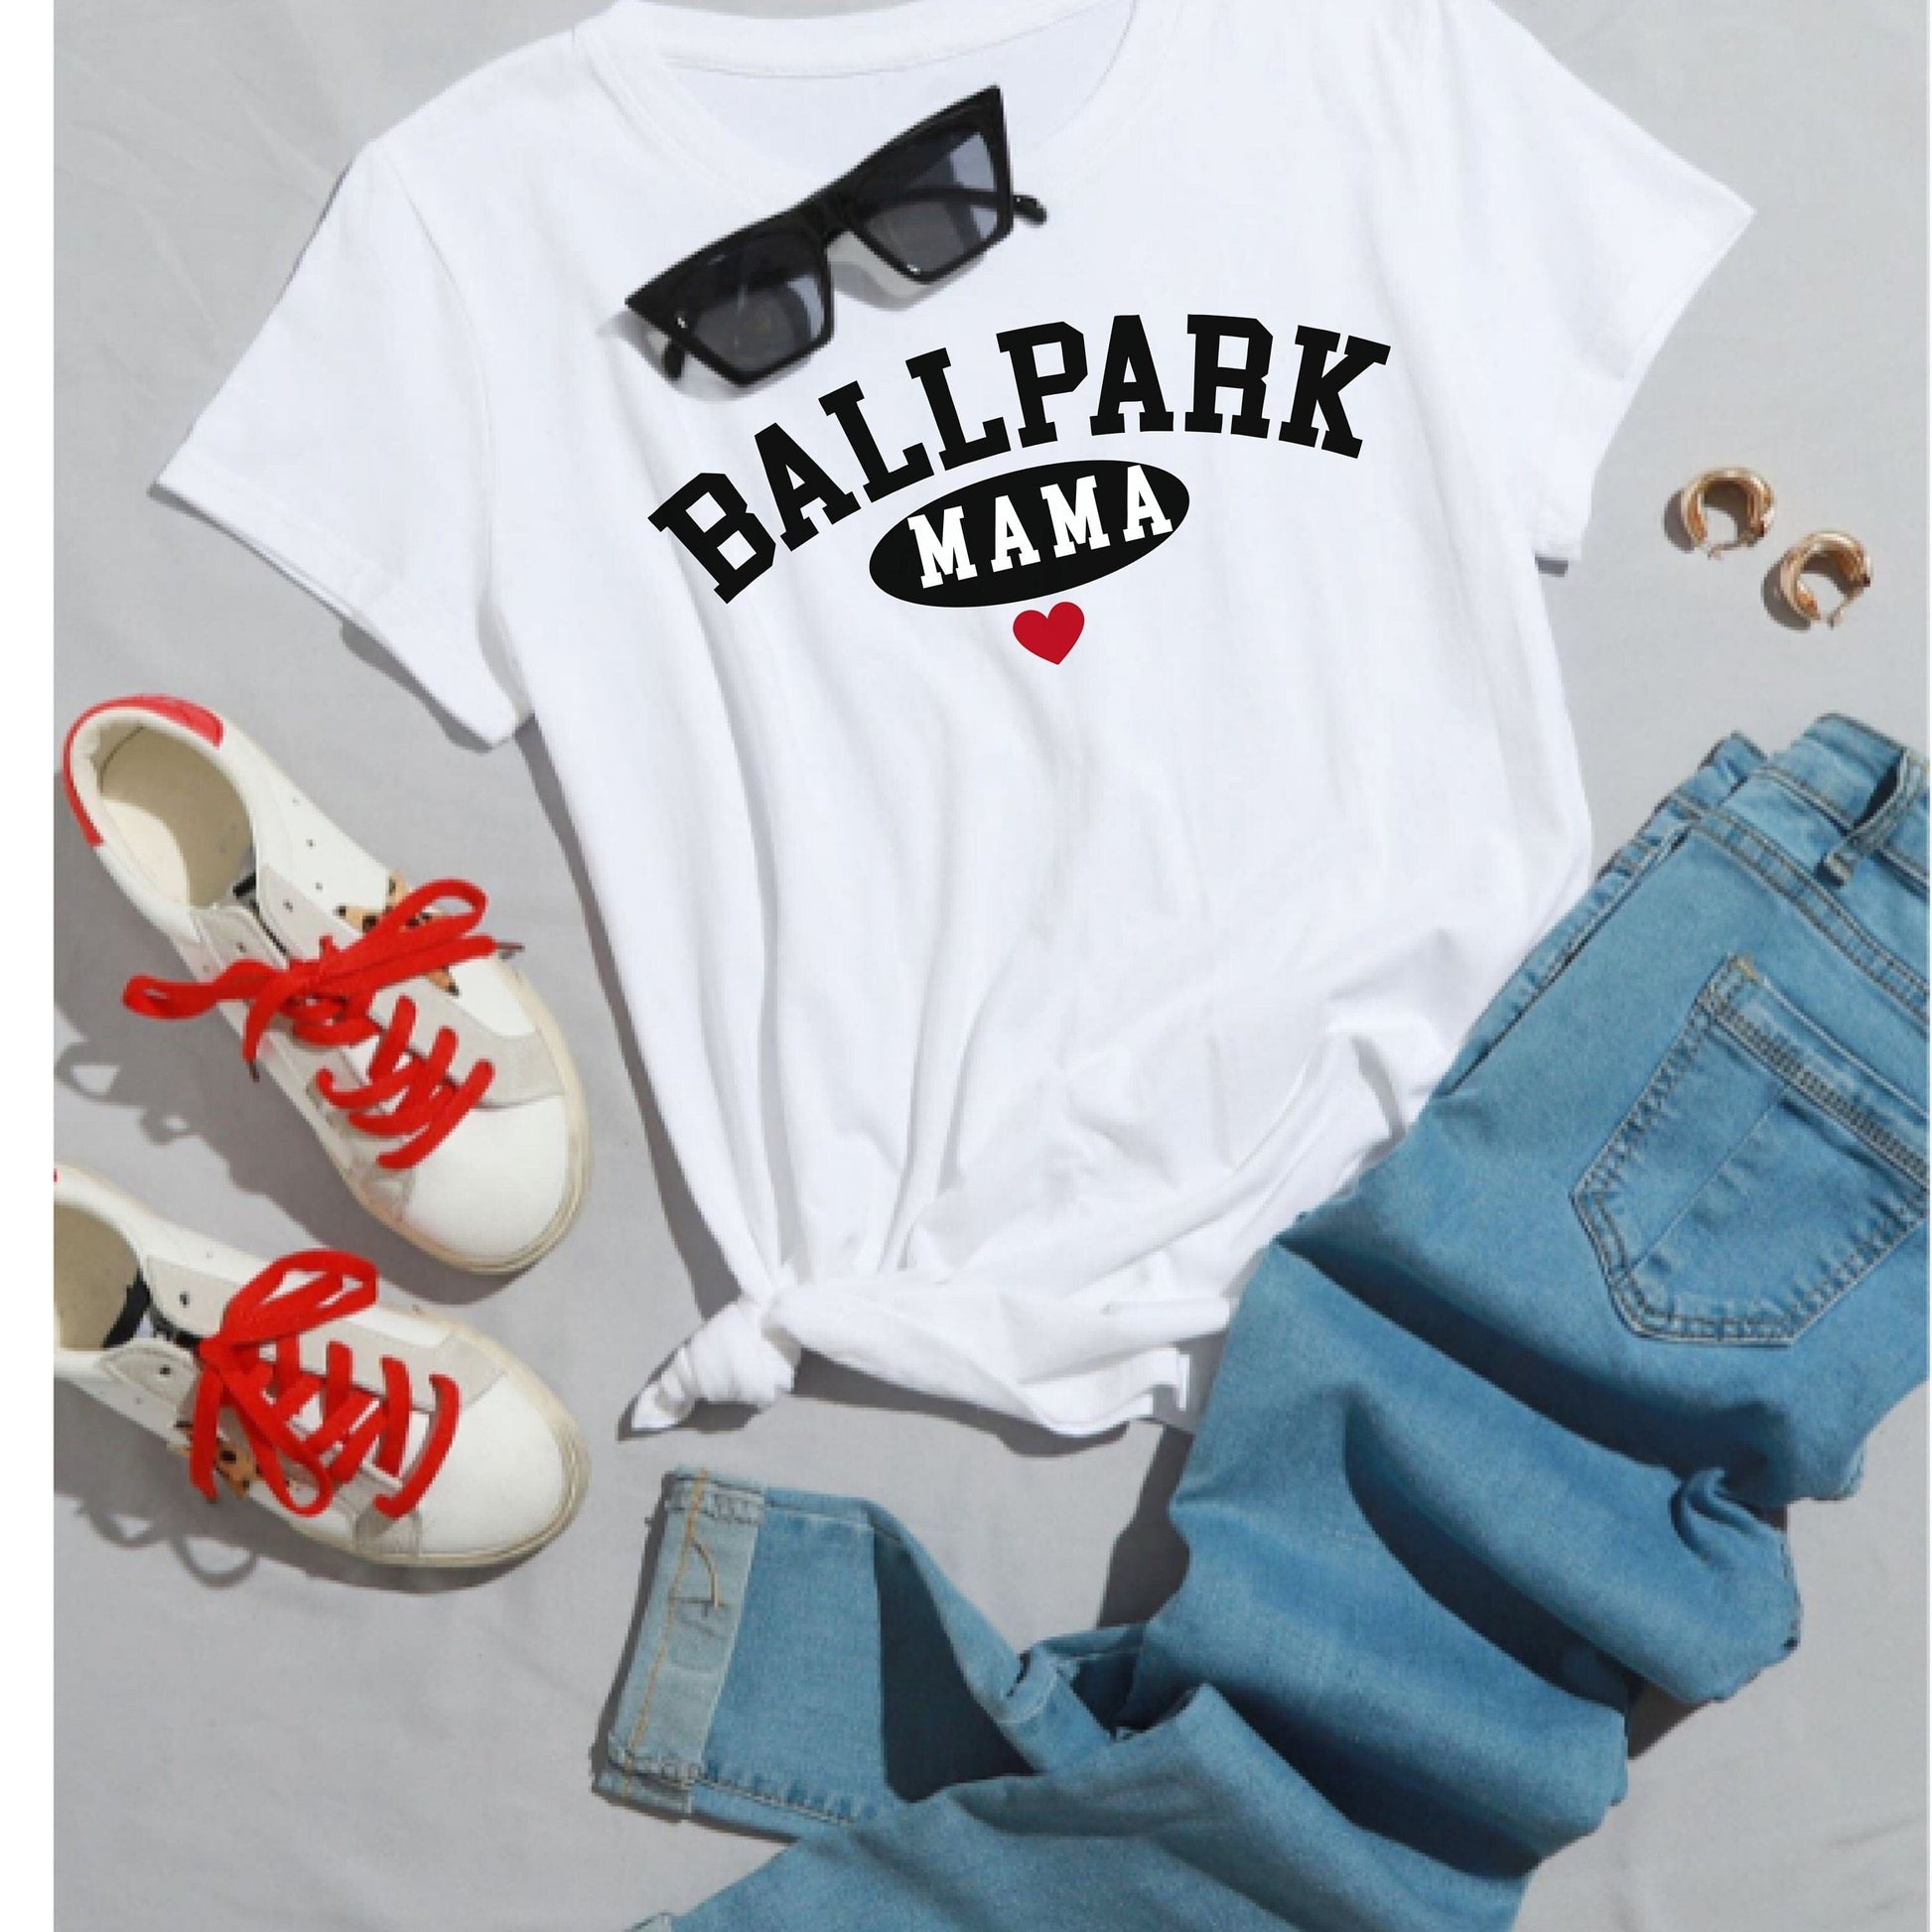 Purple LadyBug Decor Ballpark Mama Shirt | Baseball Mama Shirt | Softball Mama Shirt | Baseball and Softball Mom Shirt | Ballpark Mom T-shirt | Baseball Tee